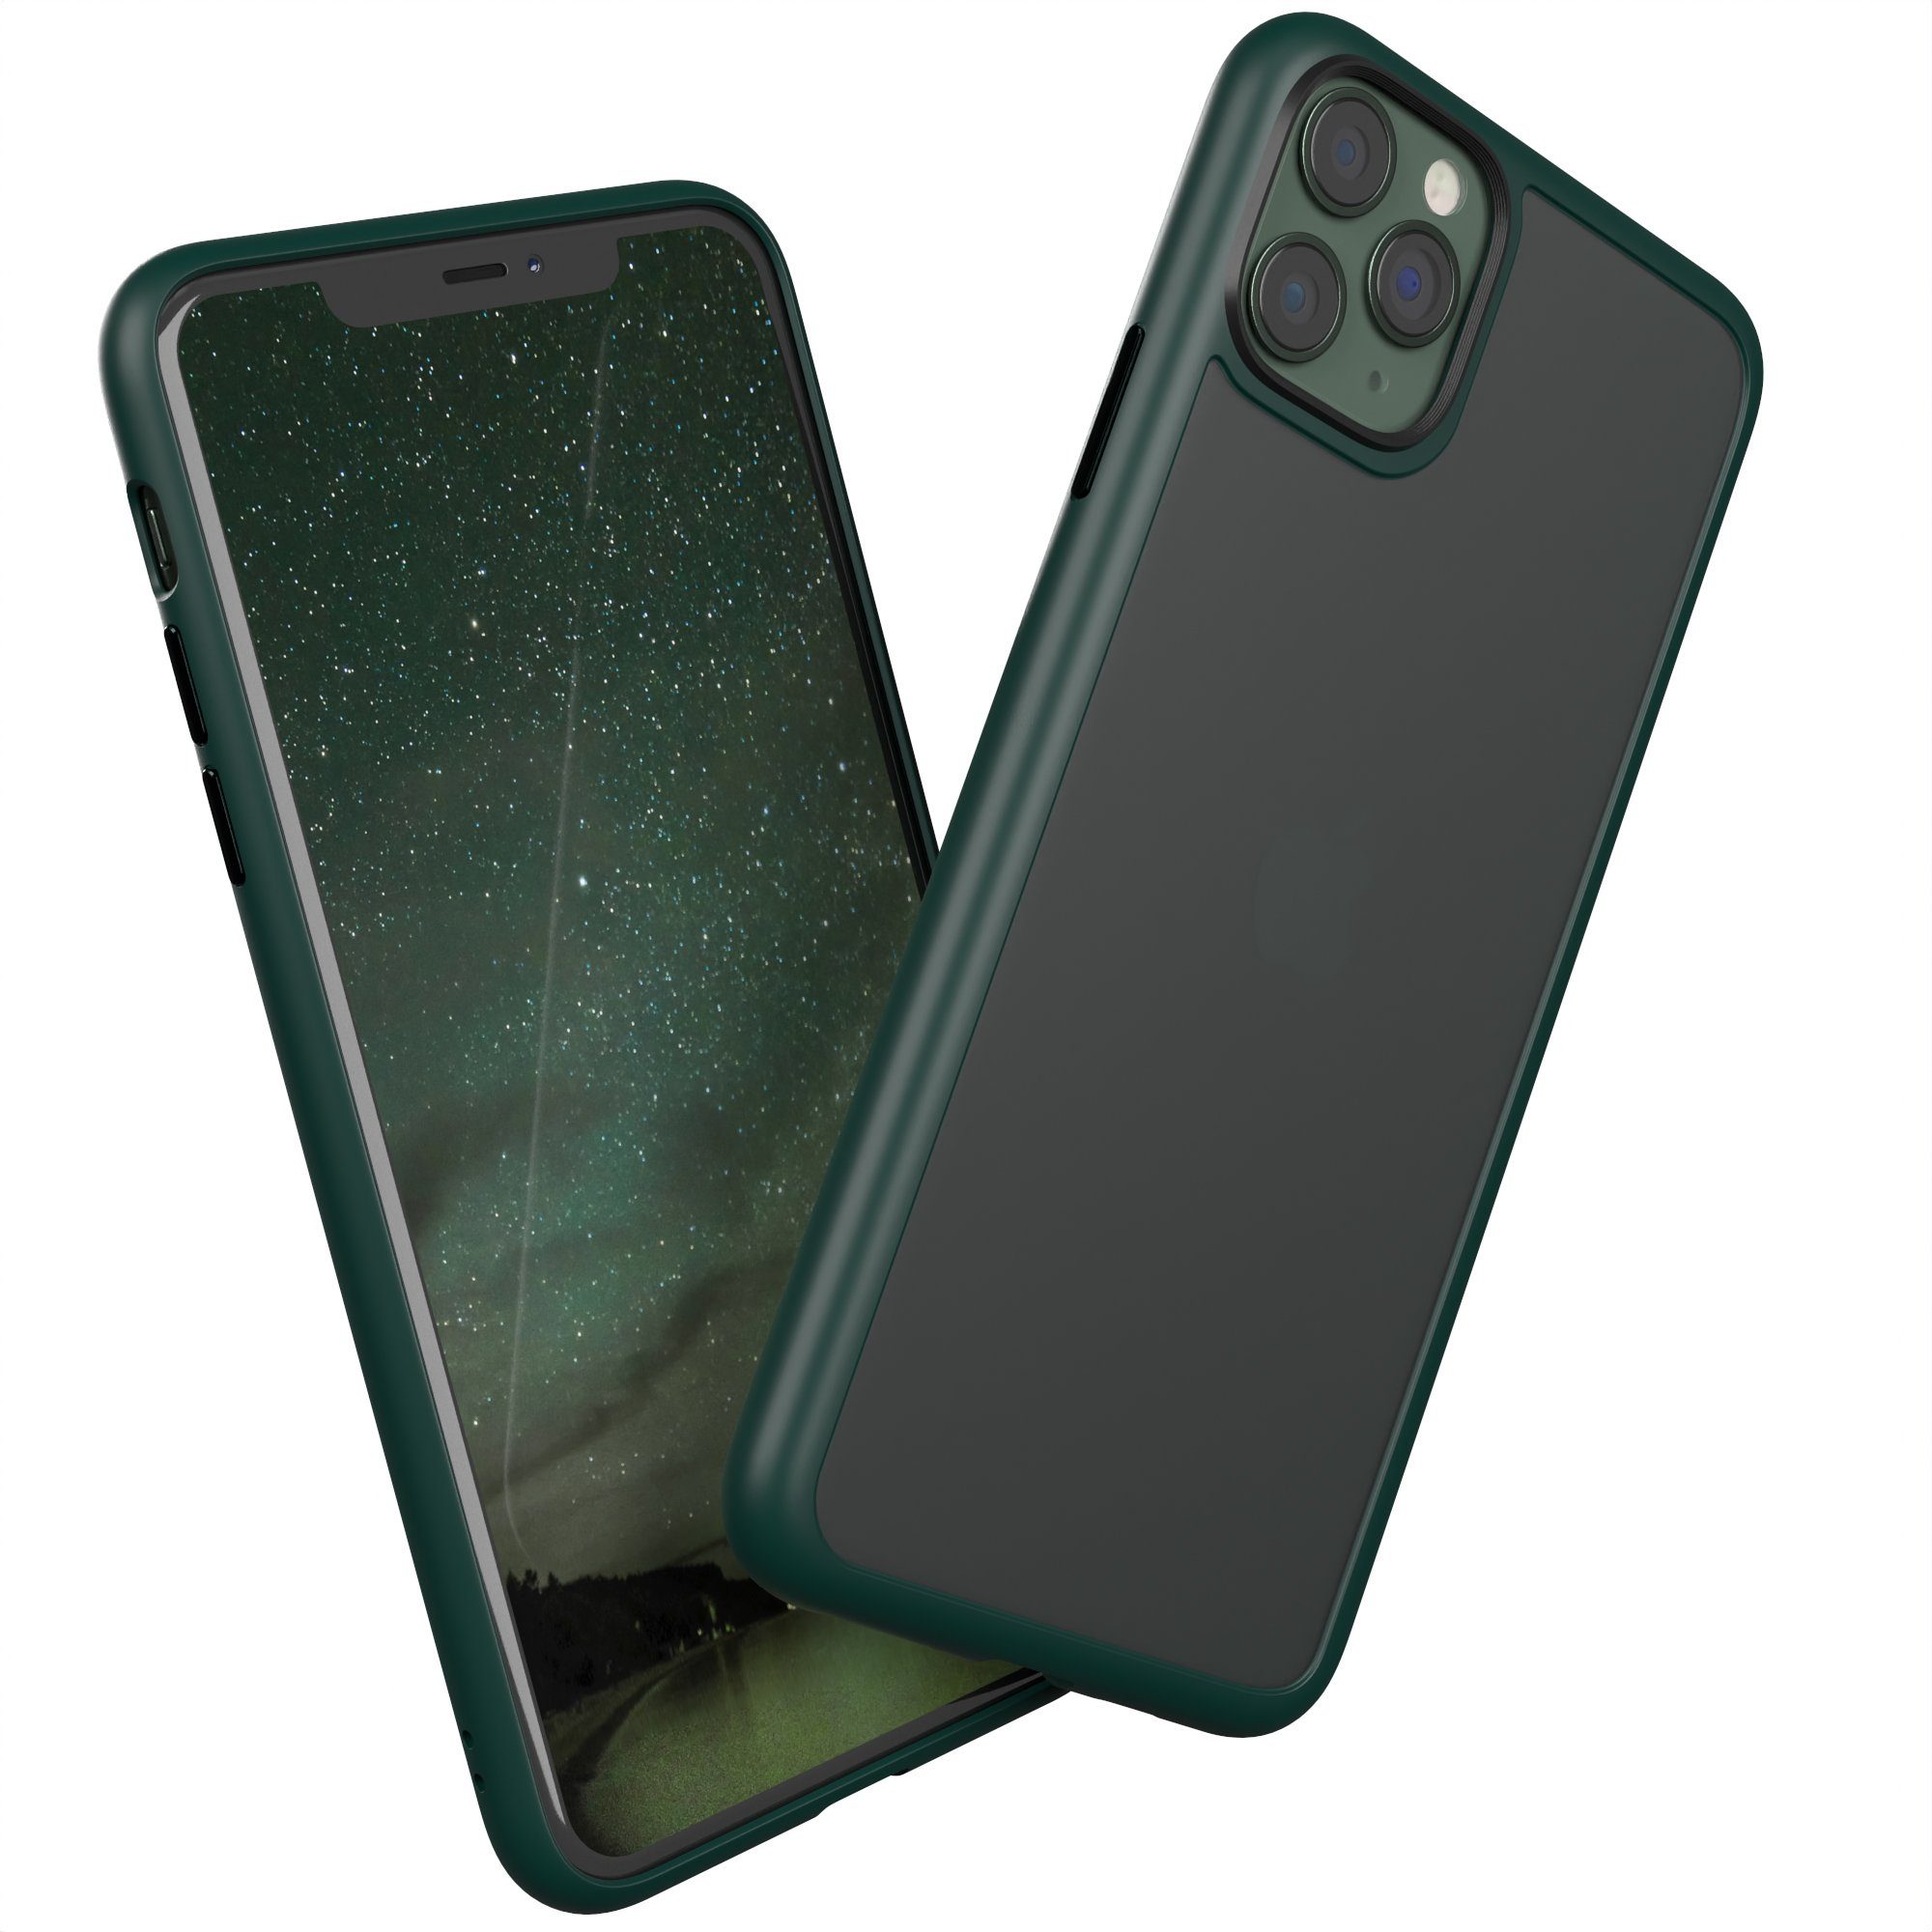 EAZY CASE Handyhülle Outdoor Case für Apple iPhone 11 Pro Max 6,5 Zoll, Slim Cover Durchsichtig Robust Back Cover stoßfest Grün / Nachtgrün